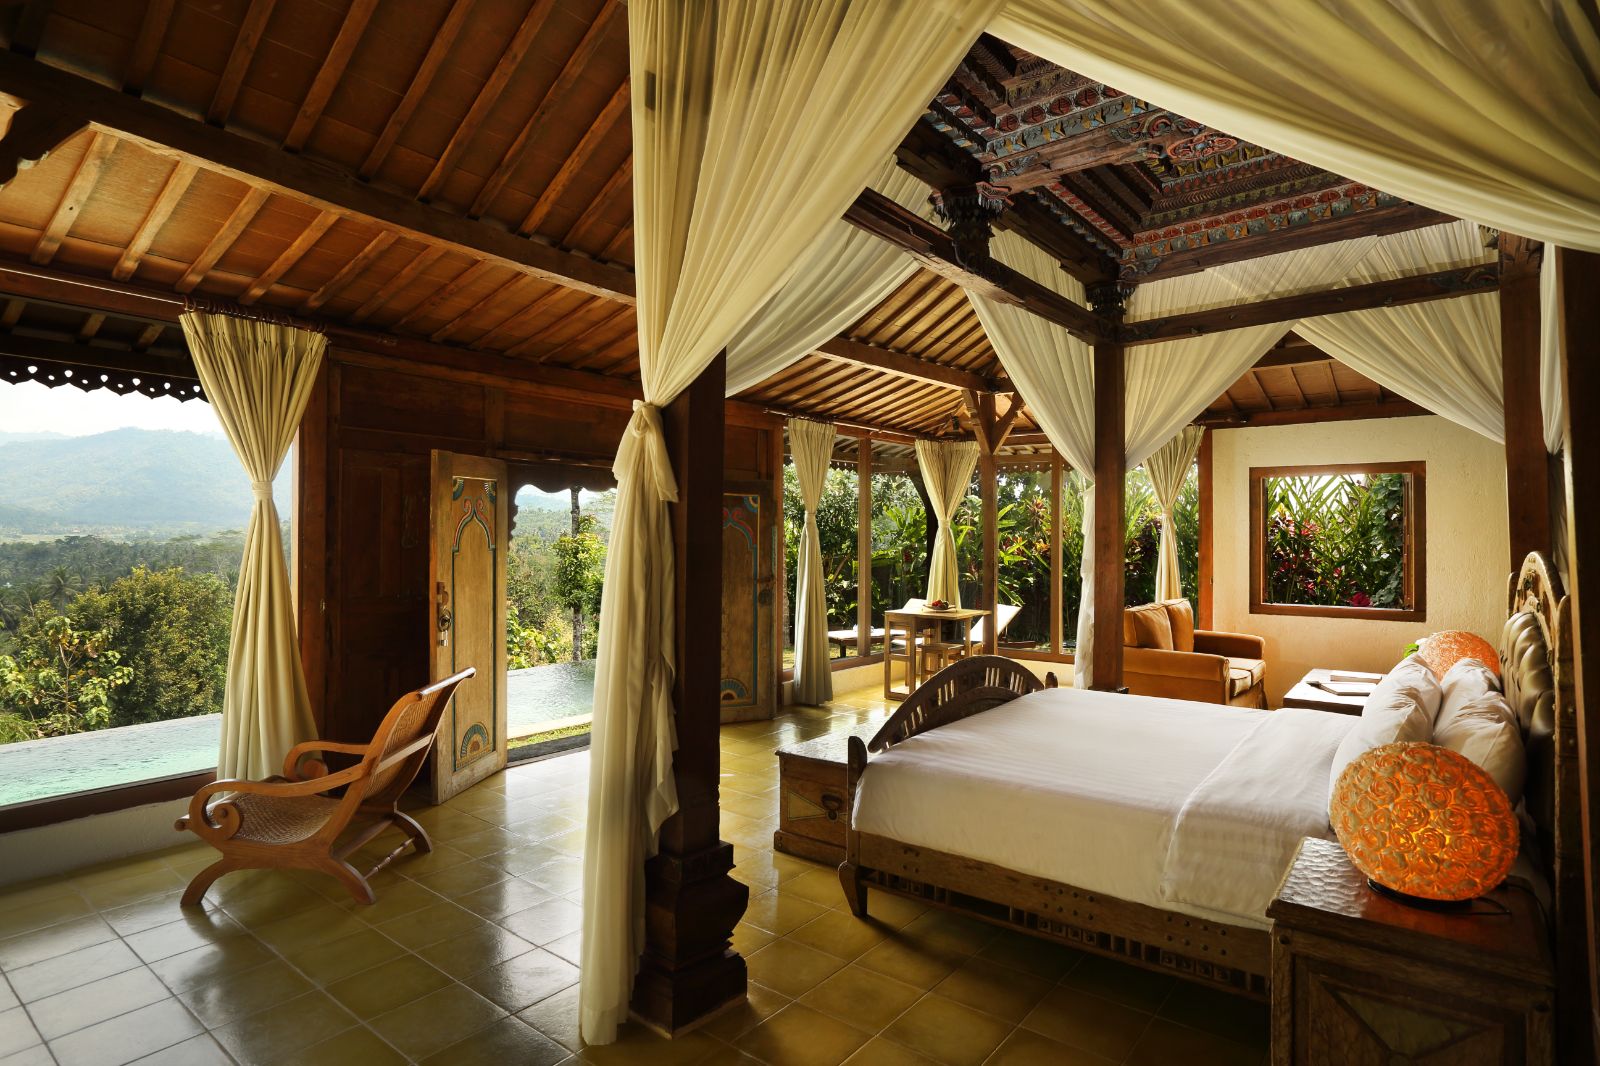 Executive Pool Villa bedroom at Plataran Borobudur Resort & Spa in Java, Indonesia